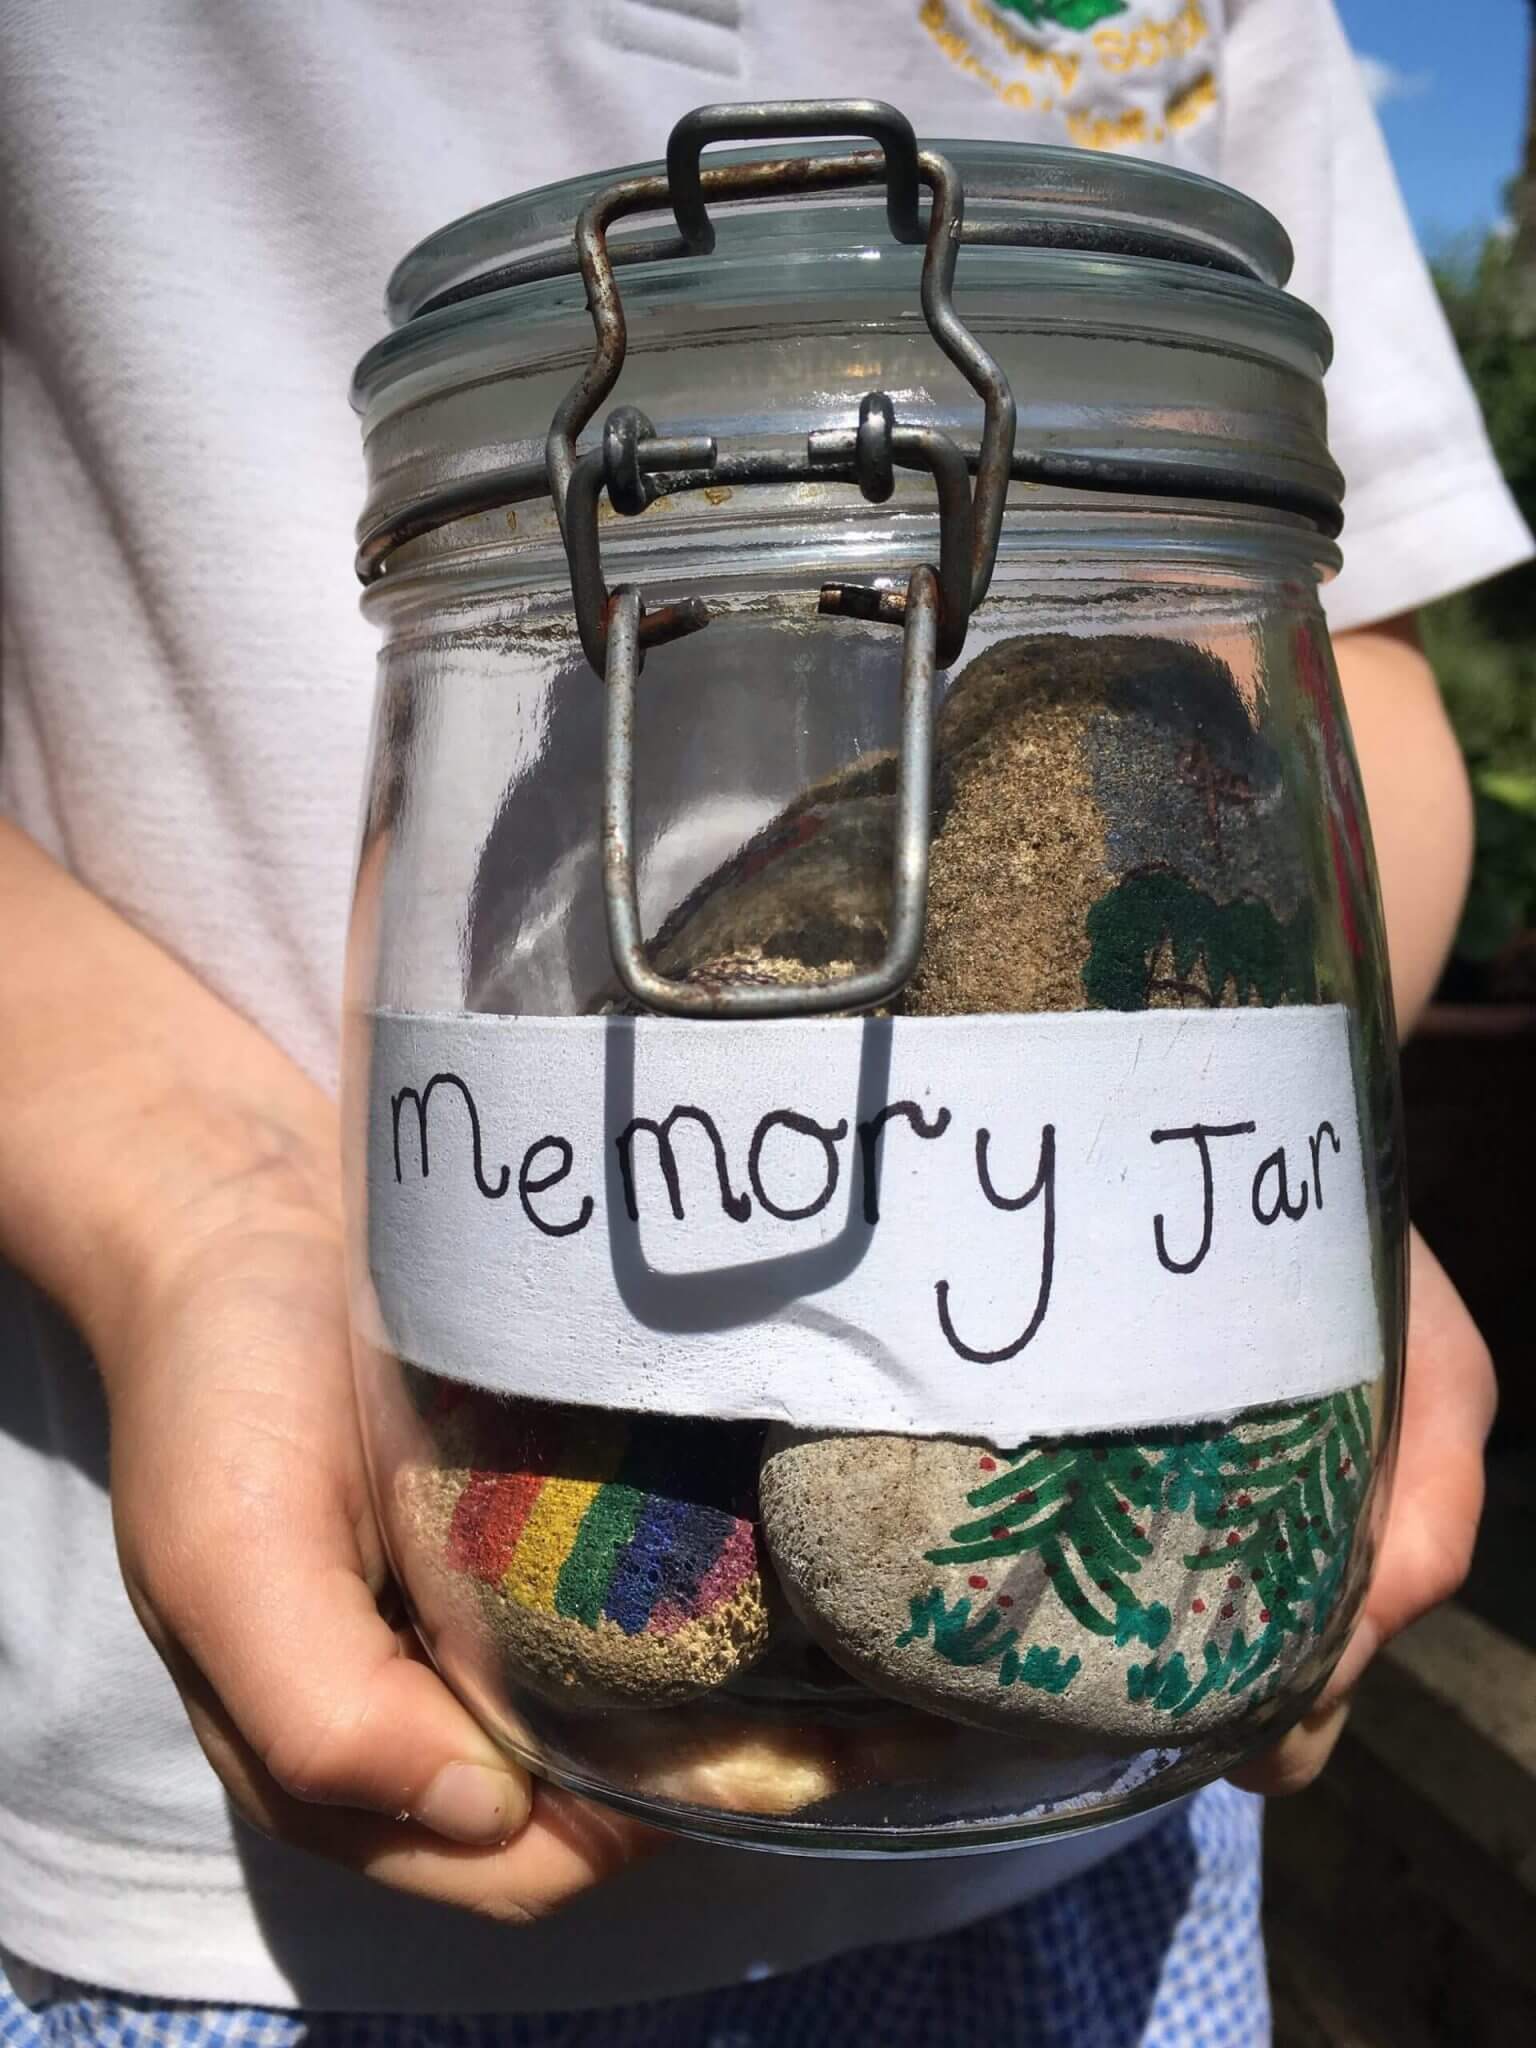 Memory jar with rocks in